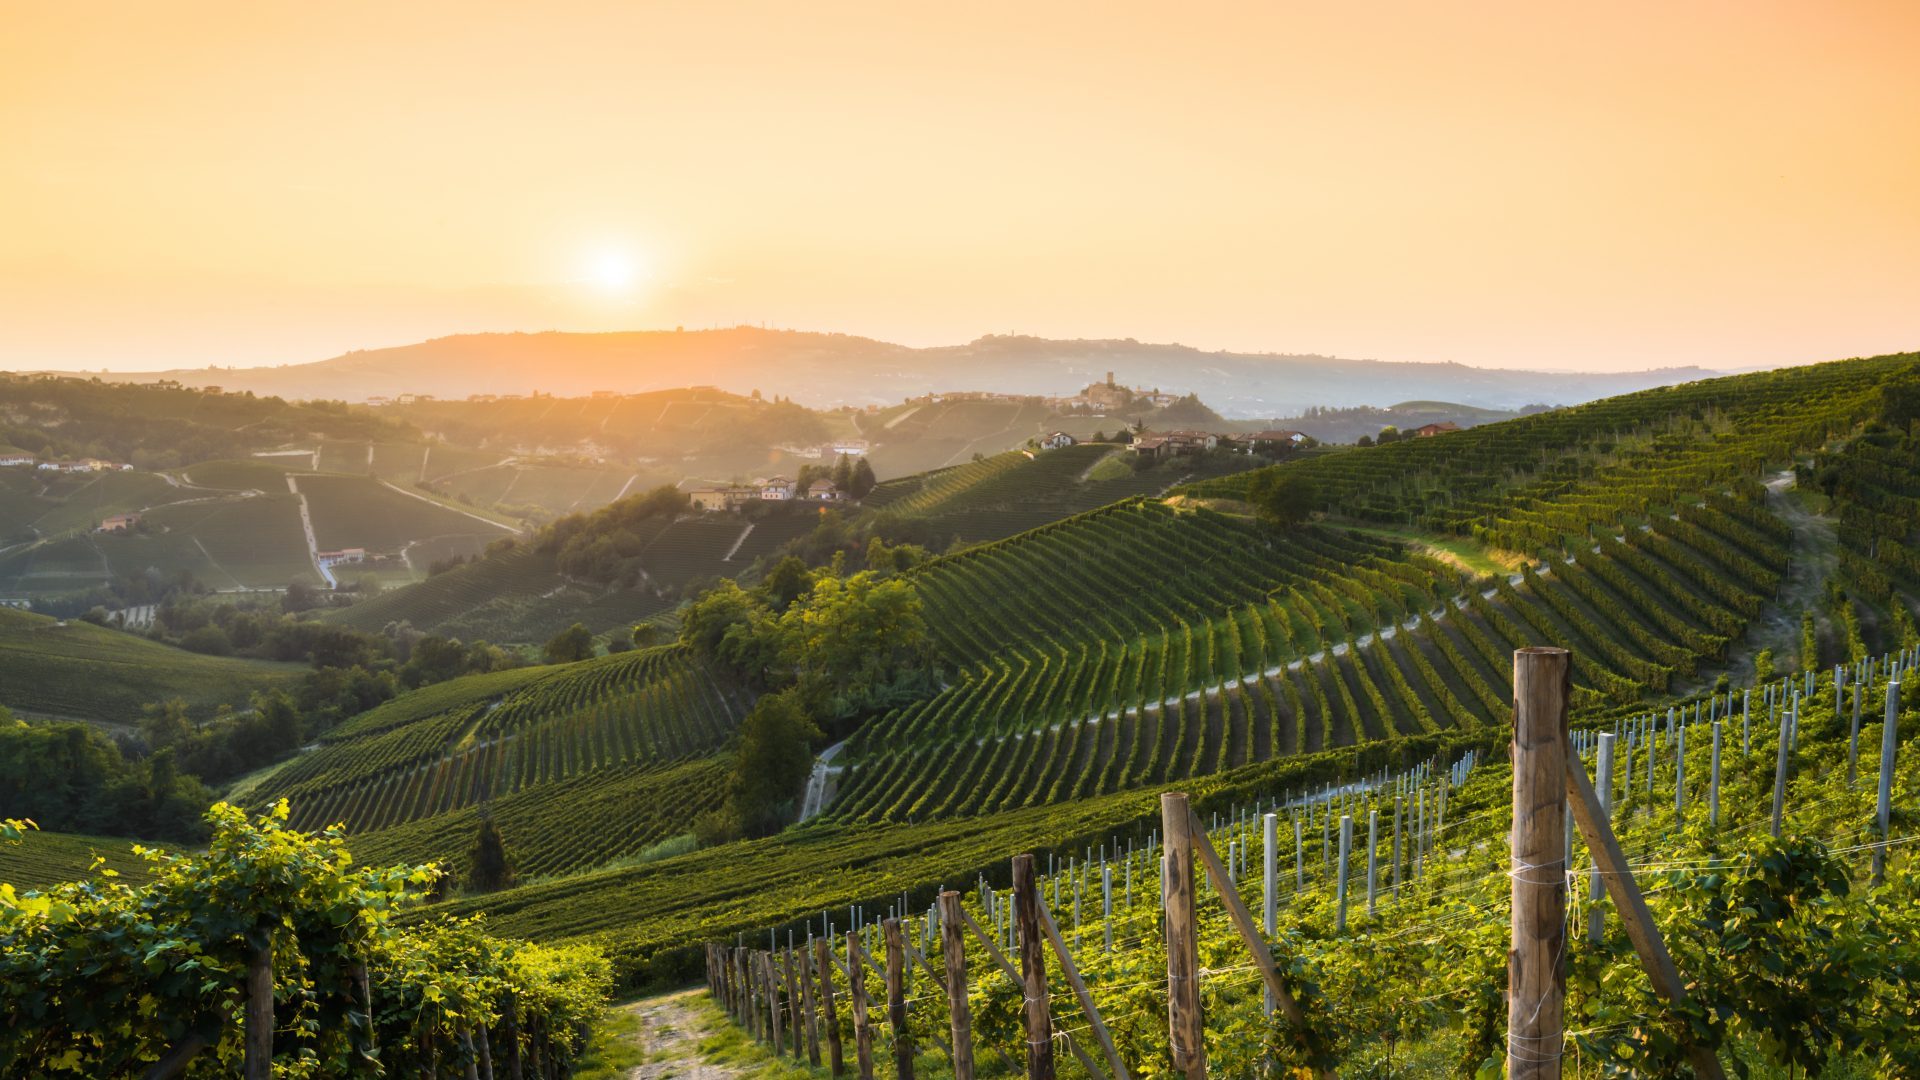 Barolo vineyards in the Langhe wine-making region, Piemonte, Italy. Photo: Marco Bottigelli/Getty